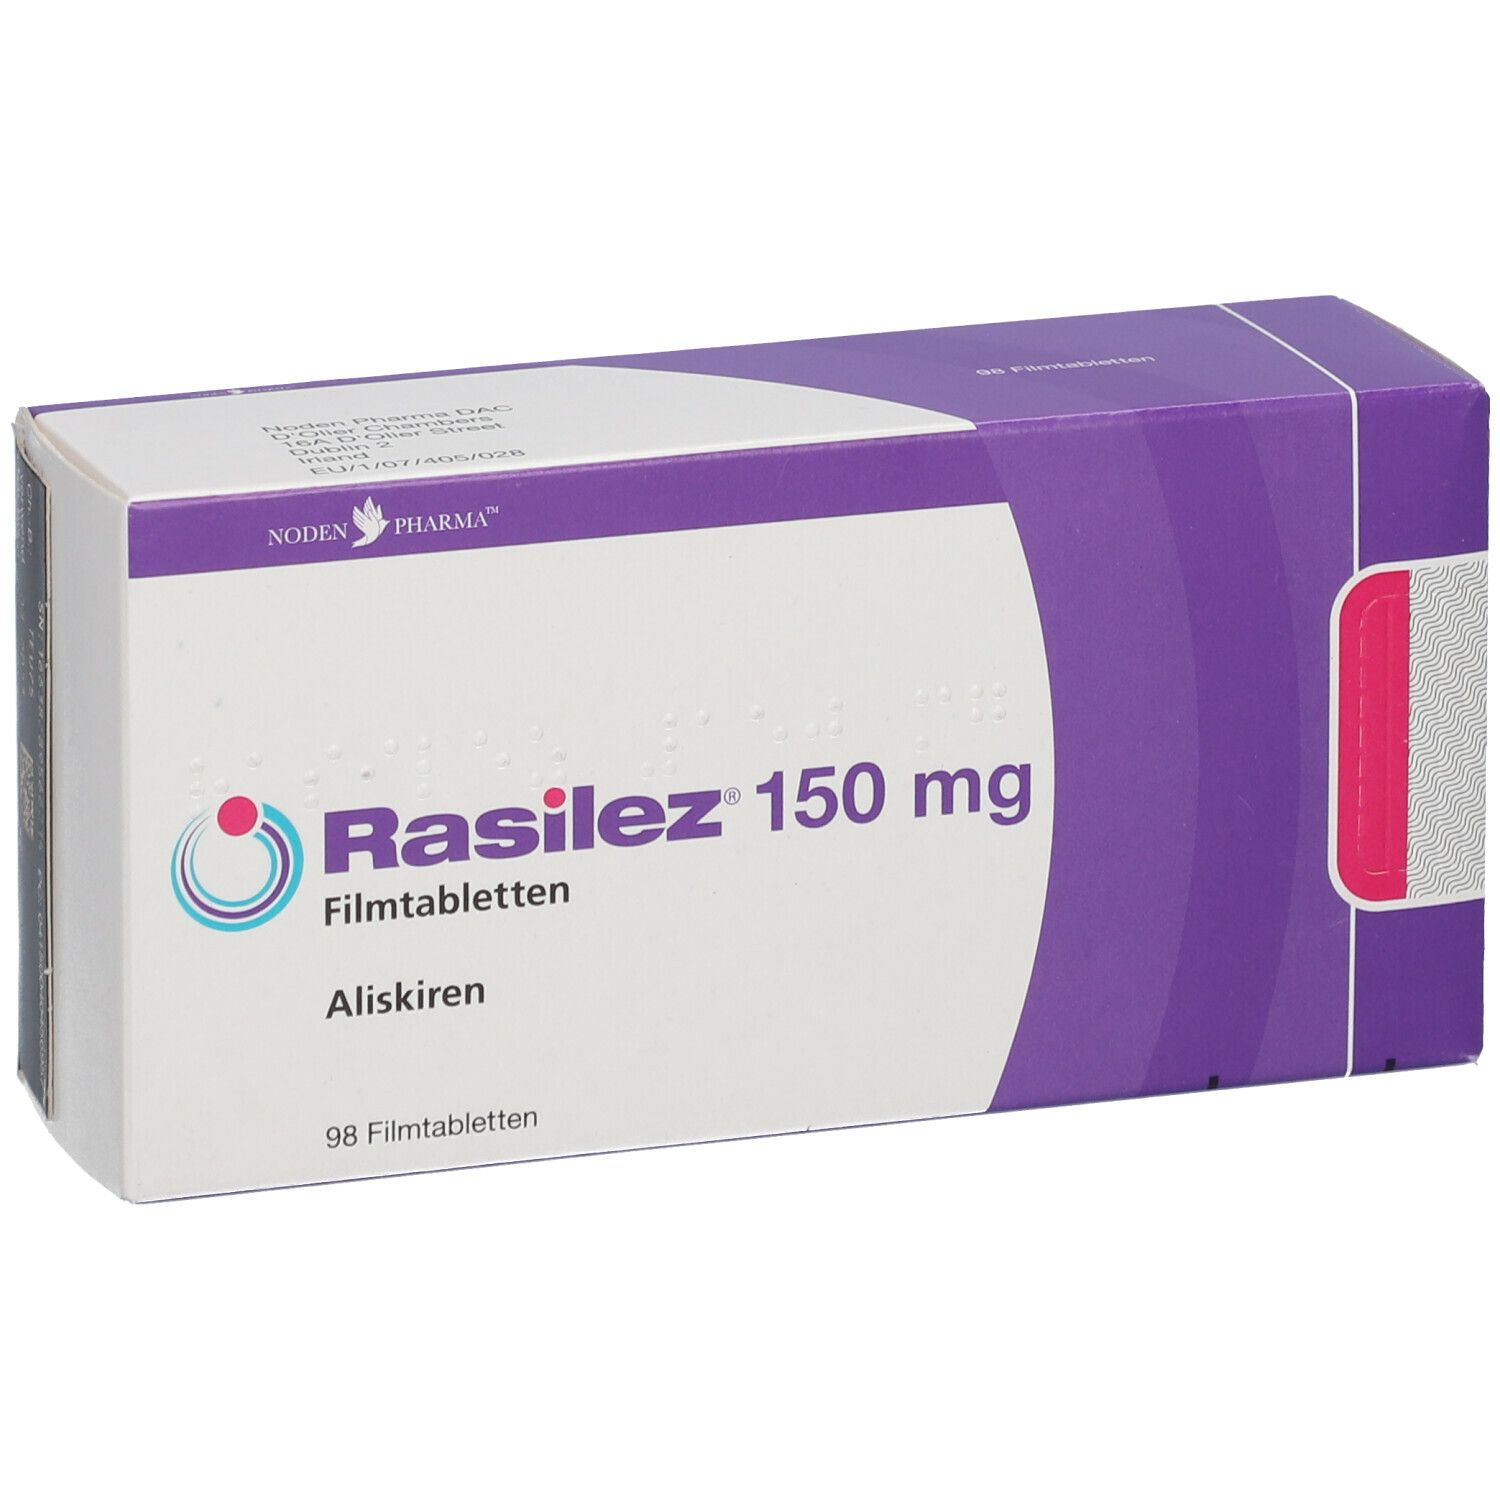 Rasilez® 150 mg